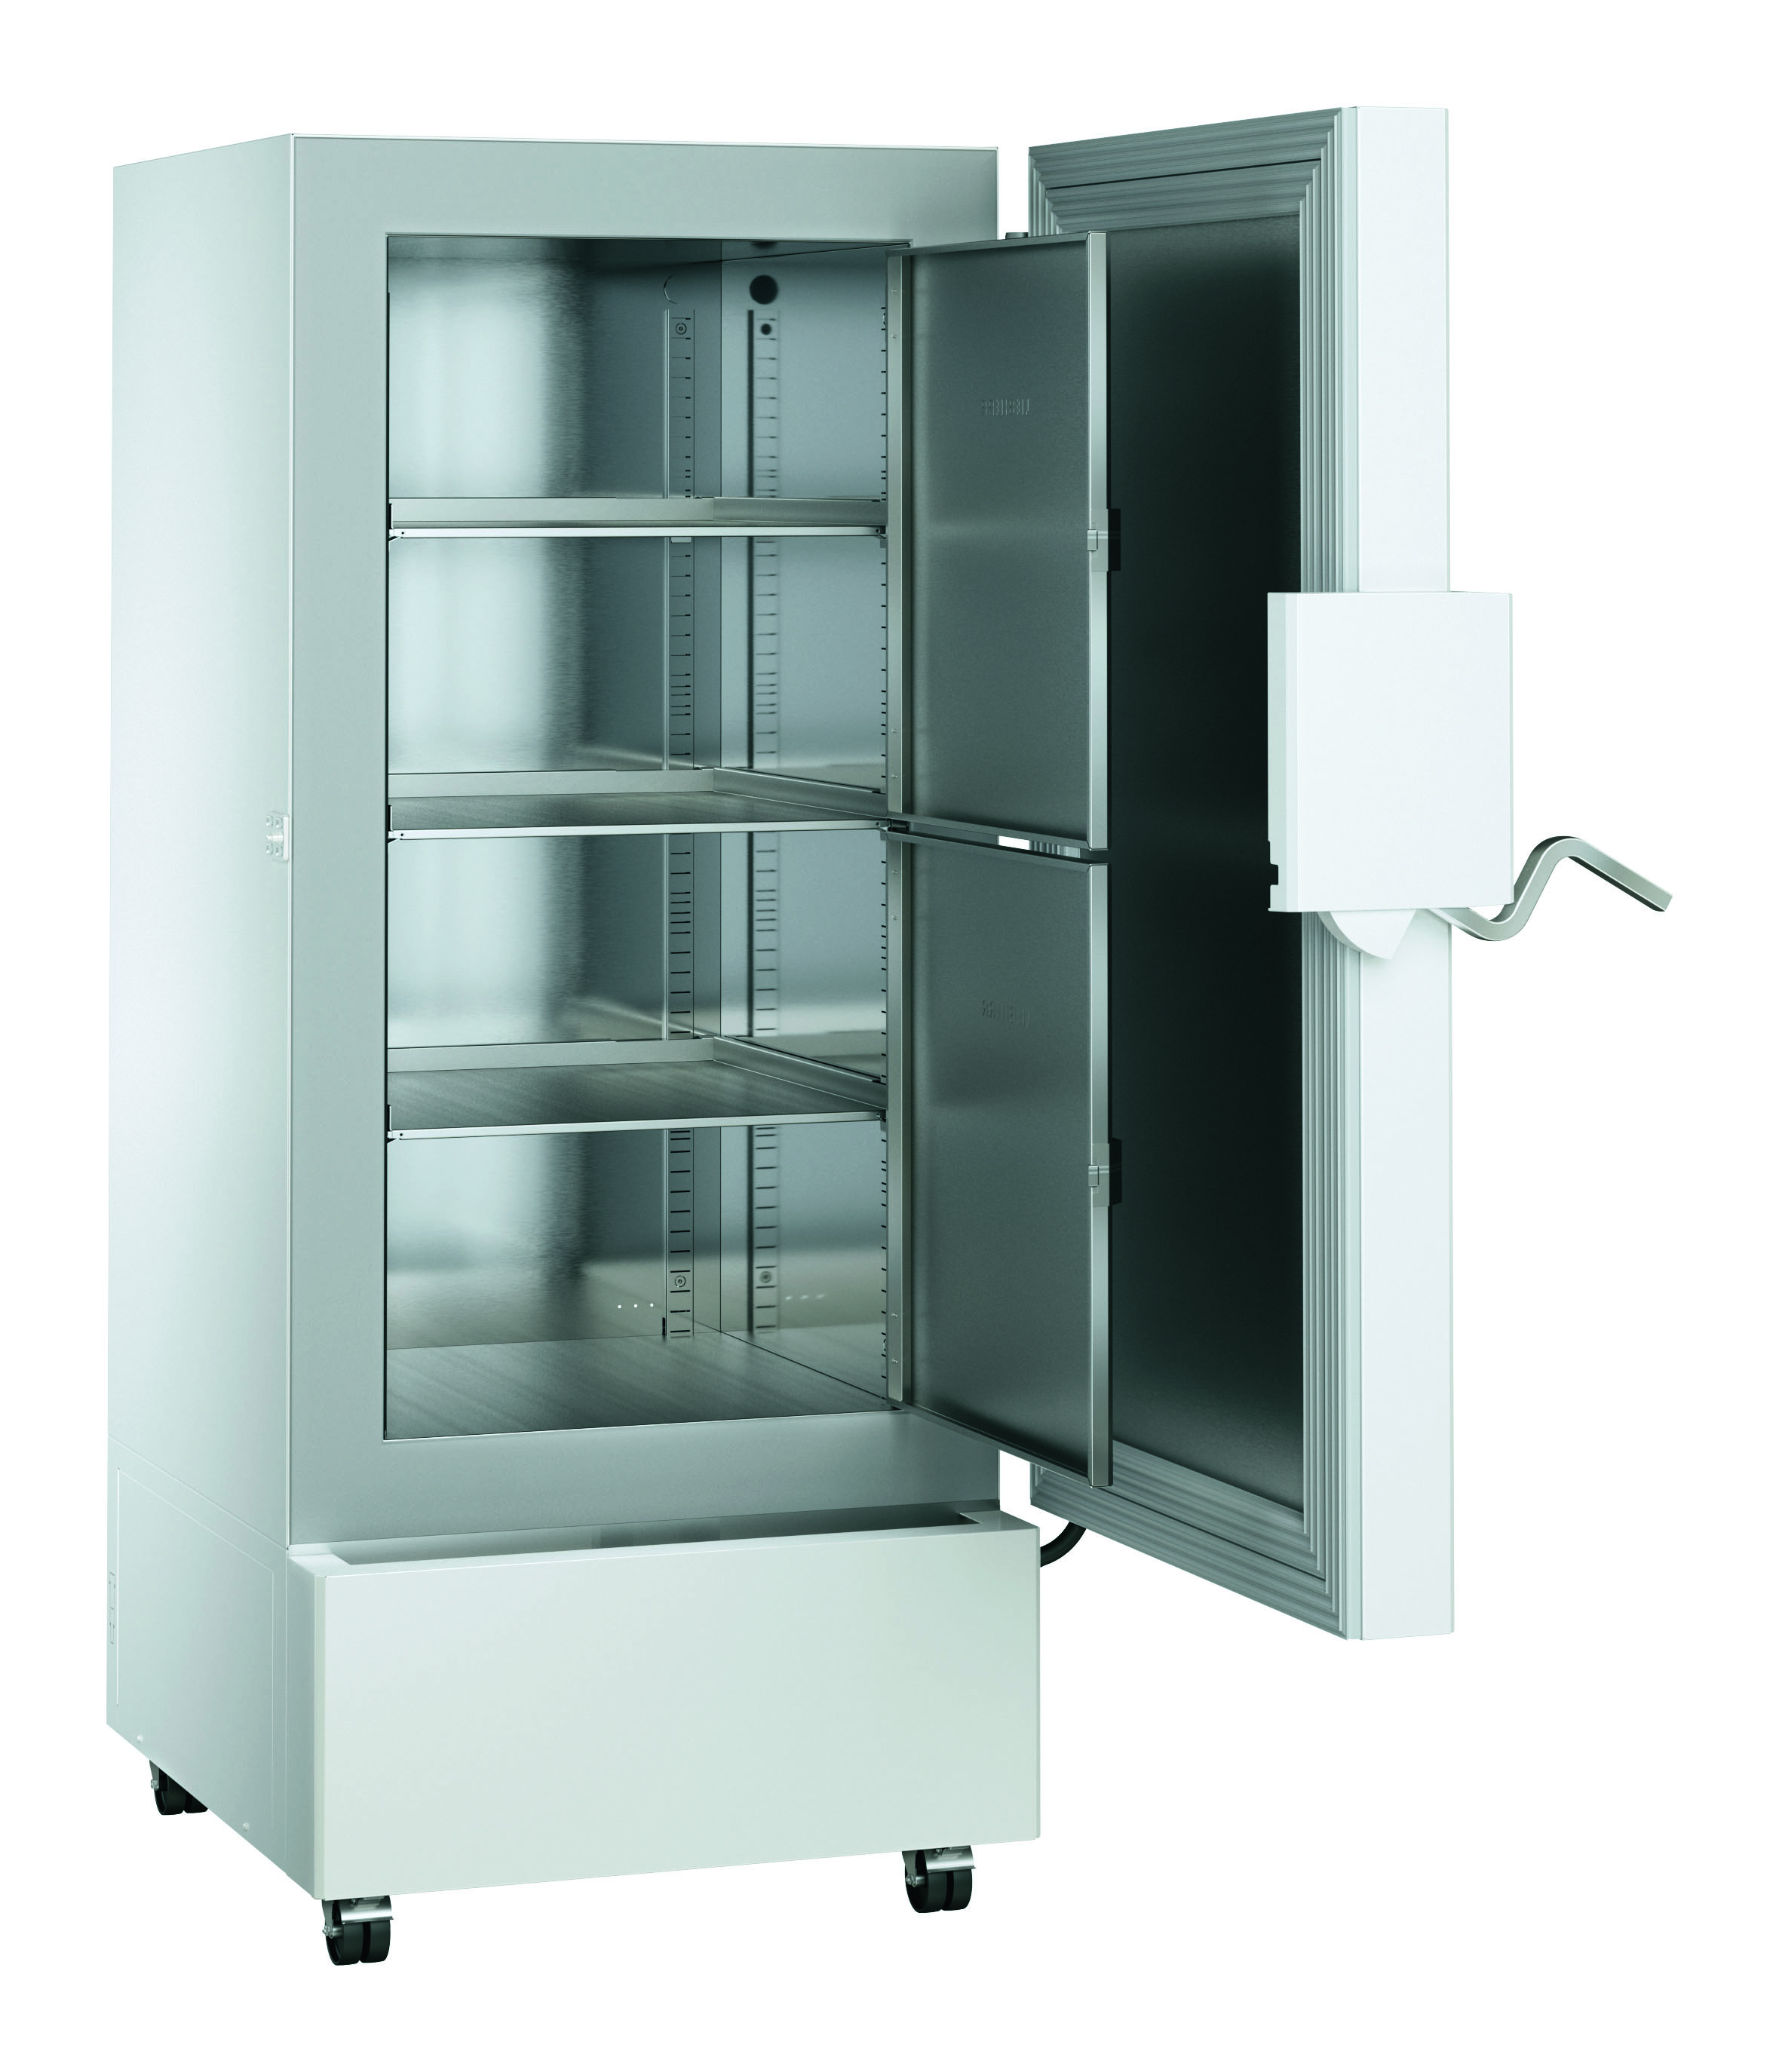 Ultra Low Temperature Freezer - 491 Litre